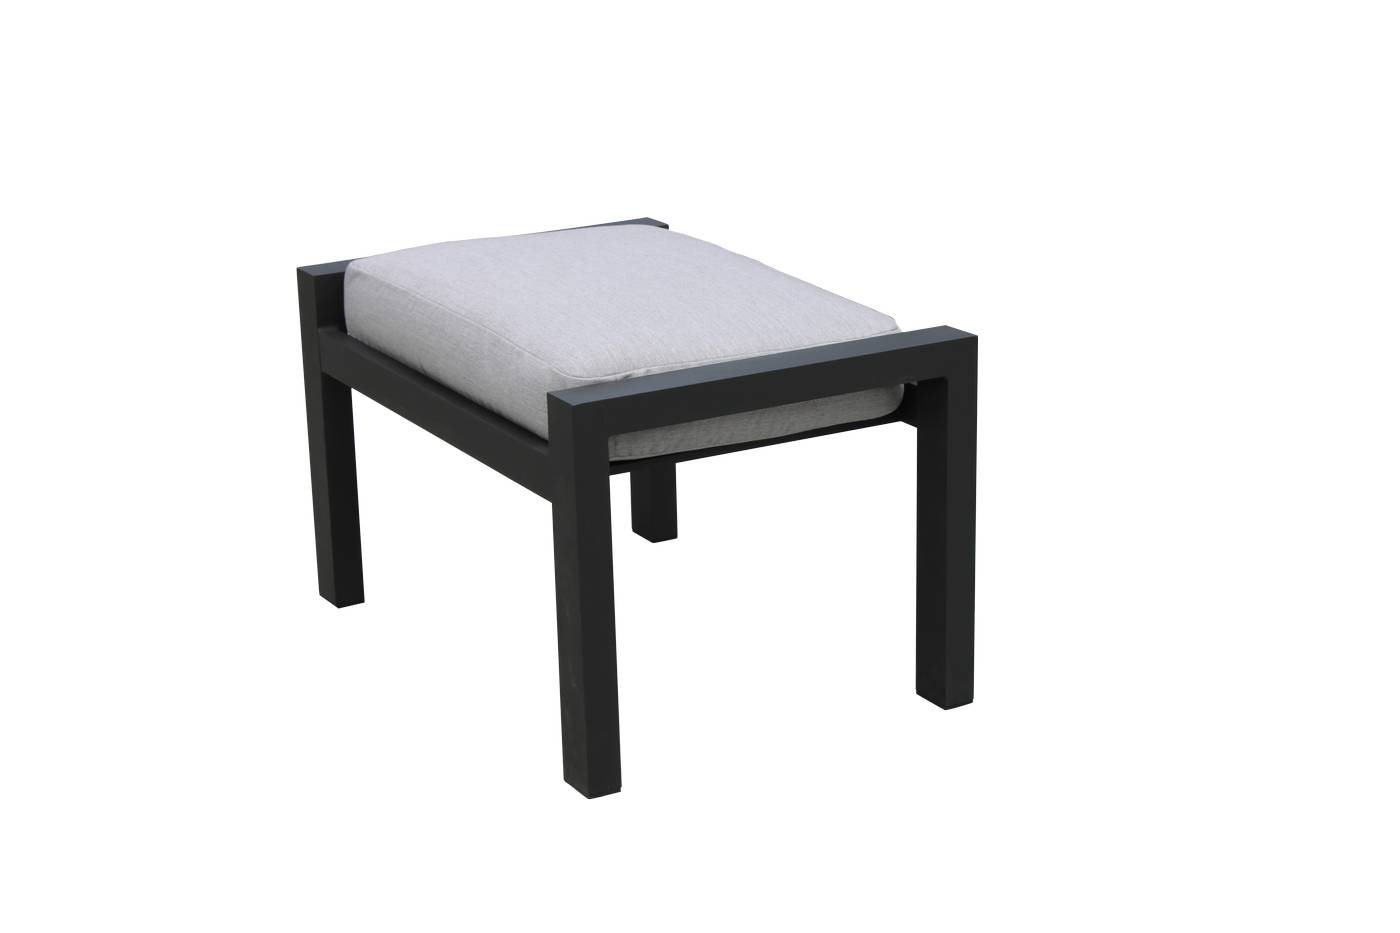 Set Aluminio Oregón-10 - Conjunto de aluminio: sofá de 3 plazas + 2 sillones + 1 mesa de centro + 2 reposapiés. Colores blanco, antracita, marrón, champagne o plata.